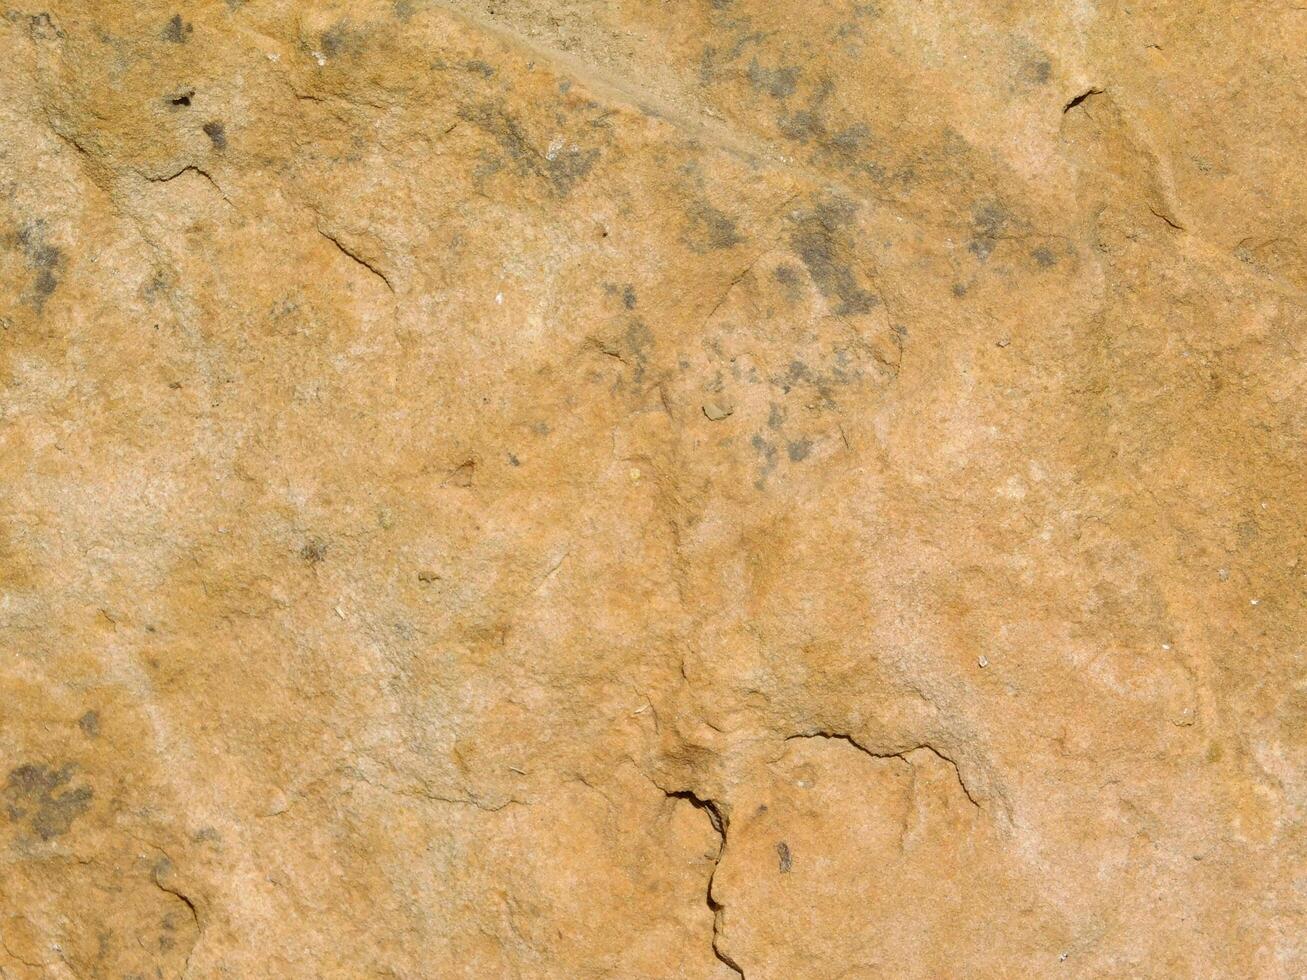 Stone texture outdoor photo